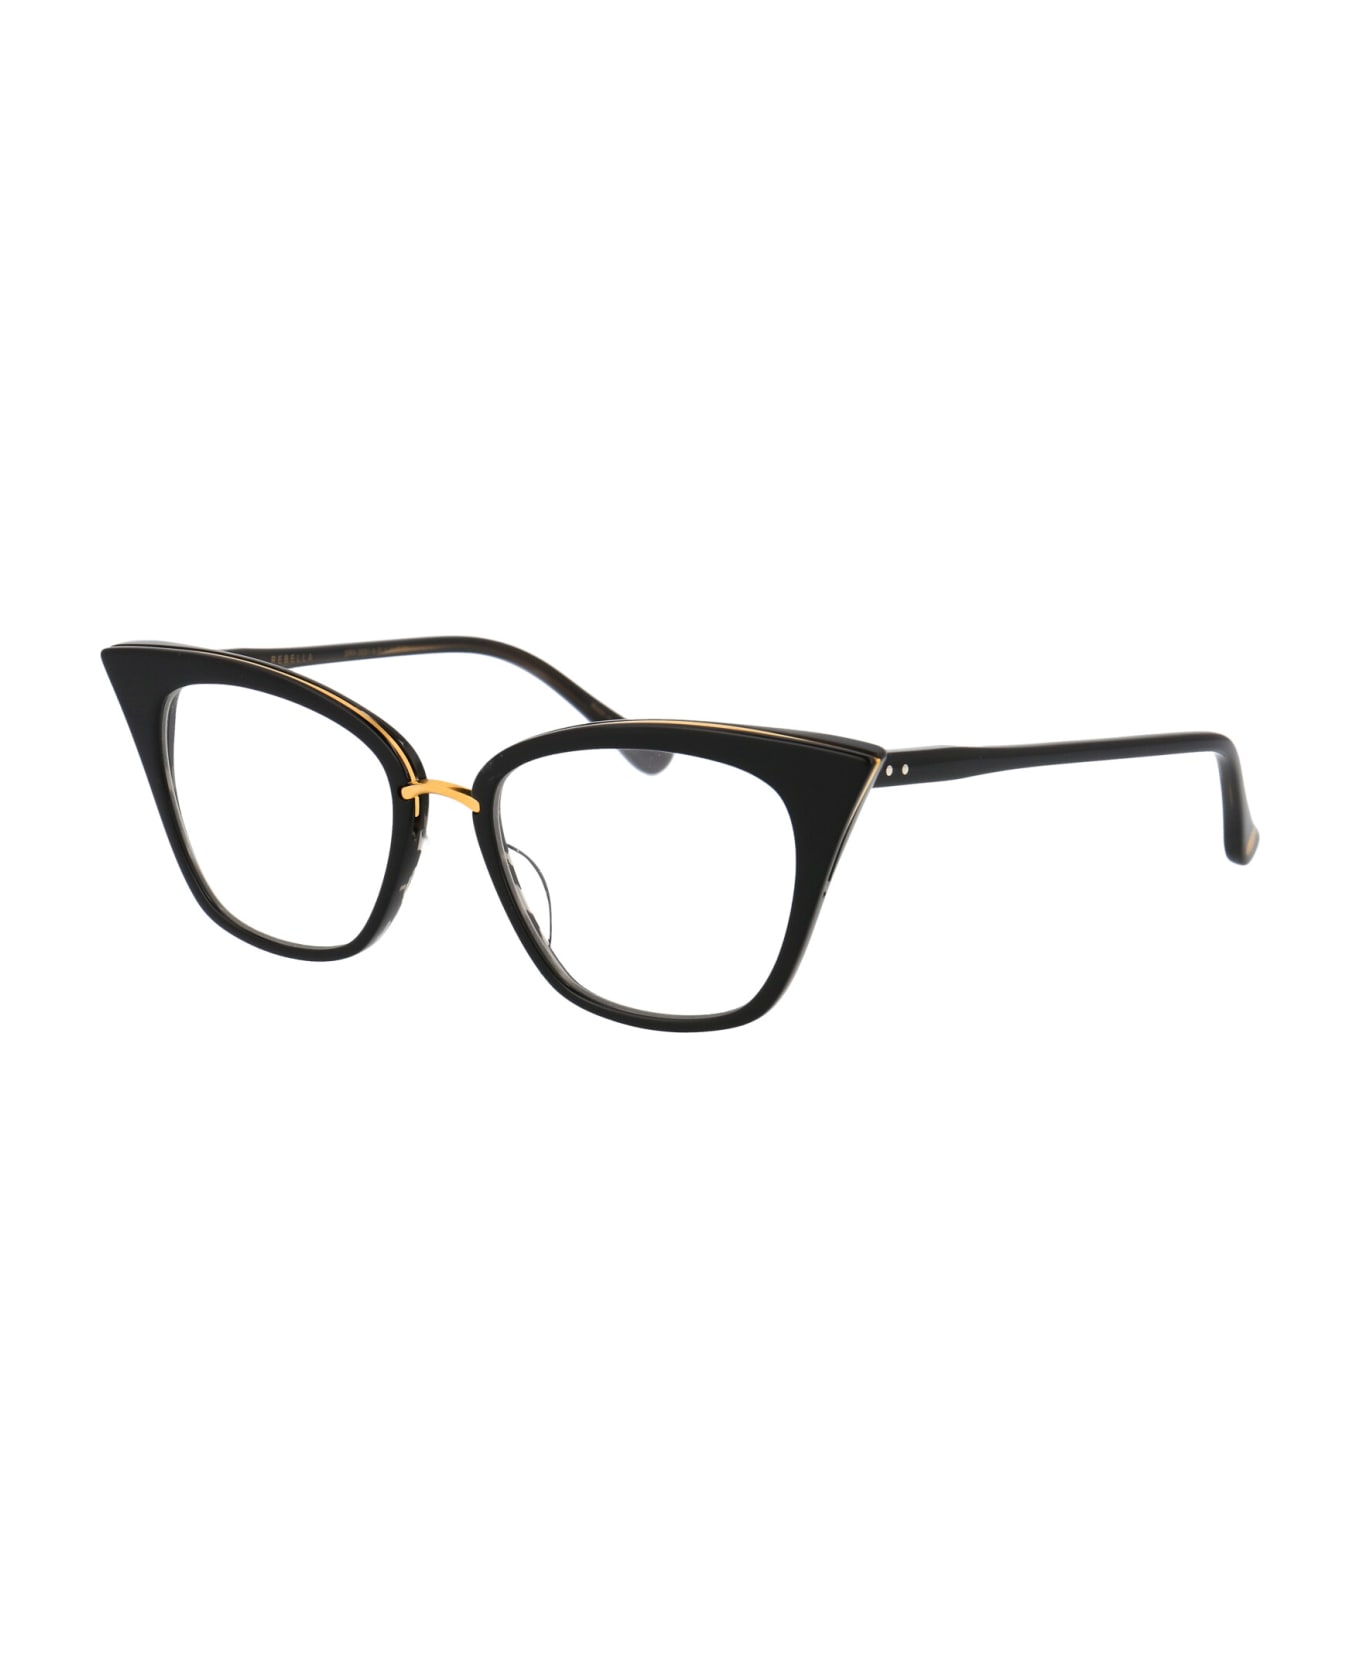 Dita Rebella Glasses - BLACK-BLACK SWIRL-18K GOLD アイウェア